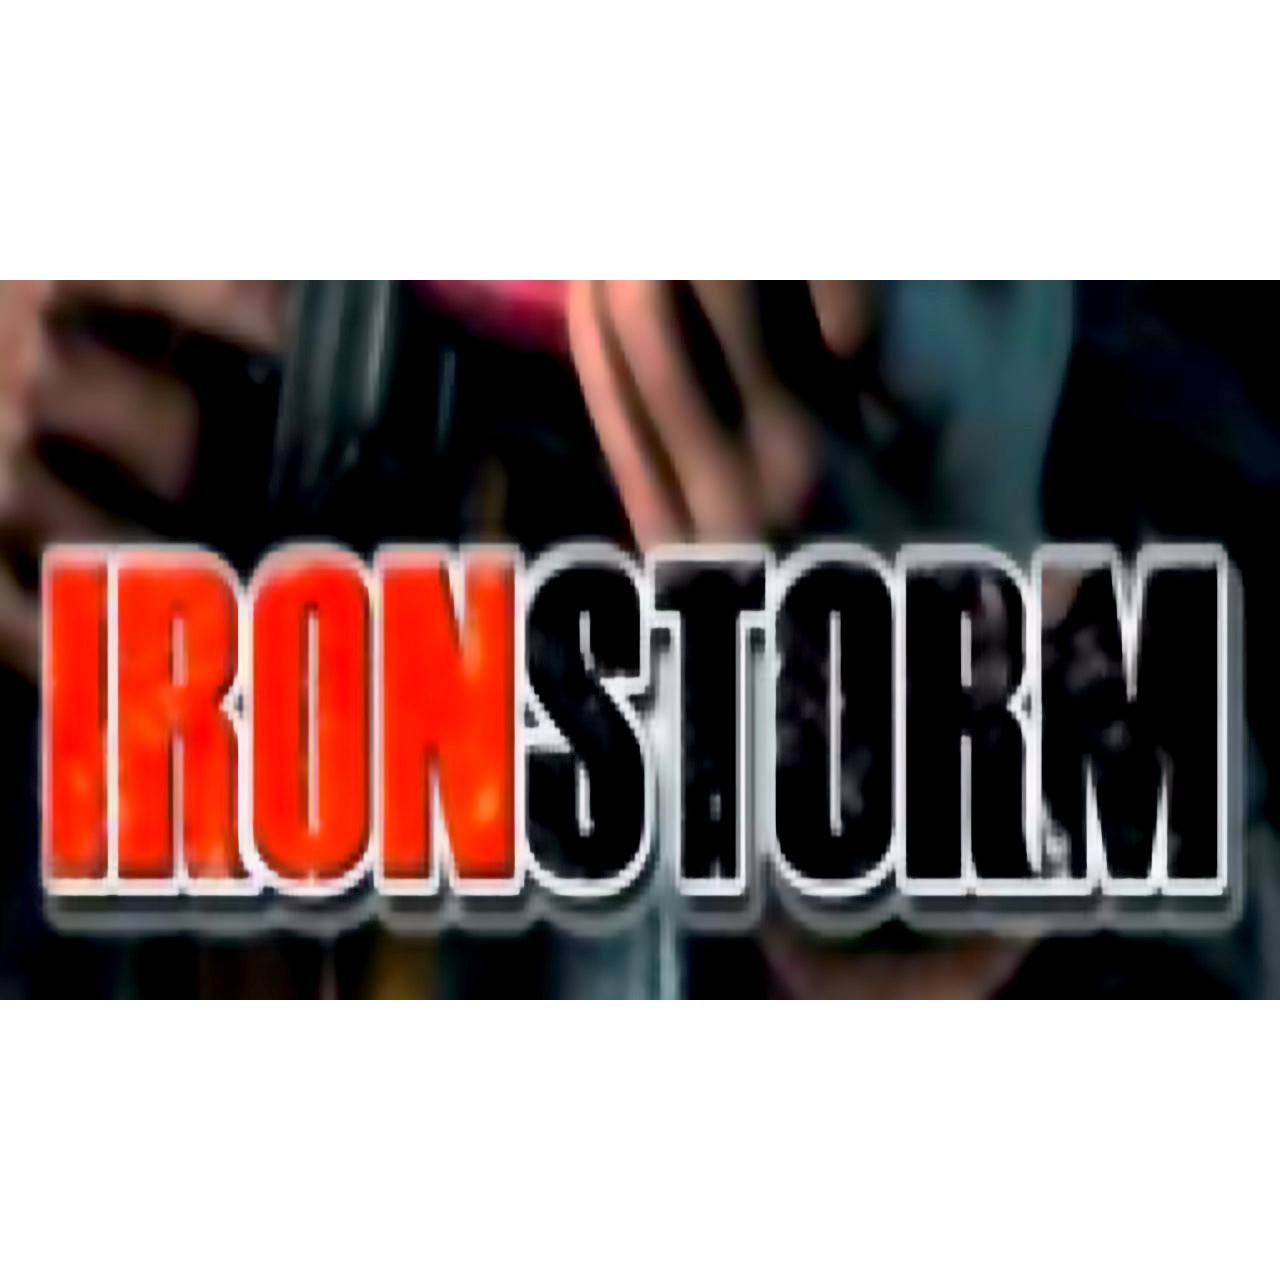 Iron Storm PC CD-ROM Game